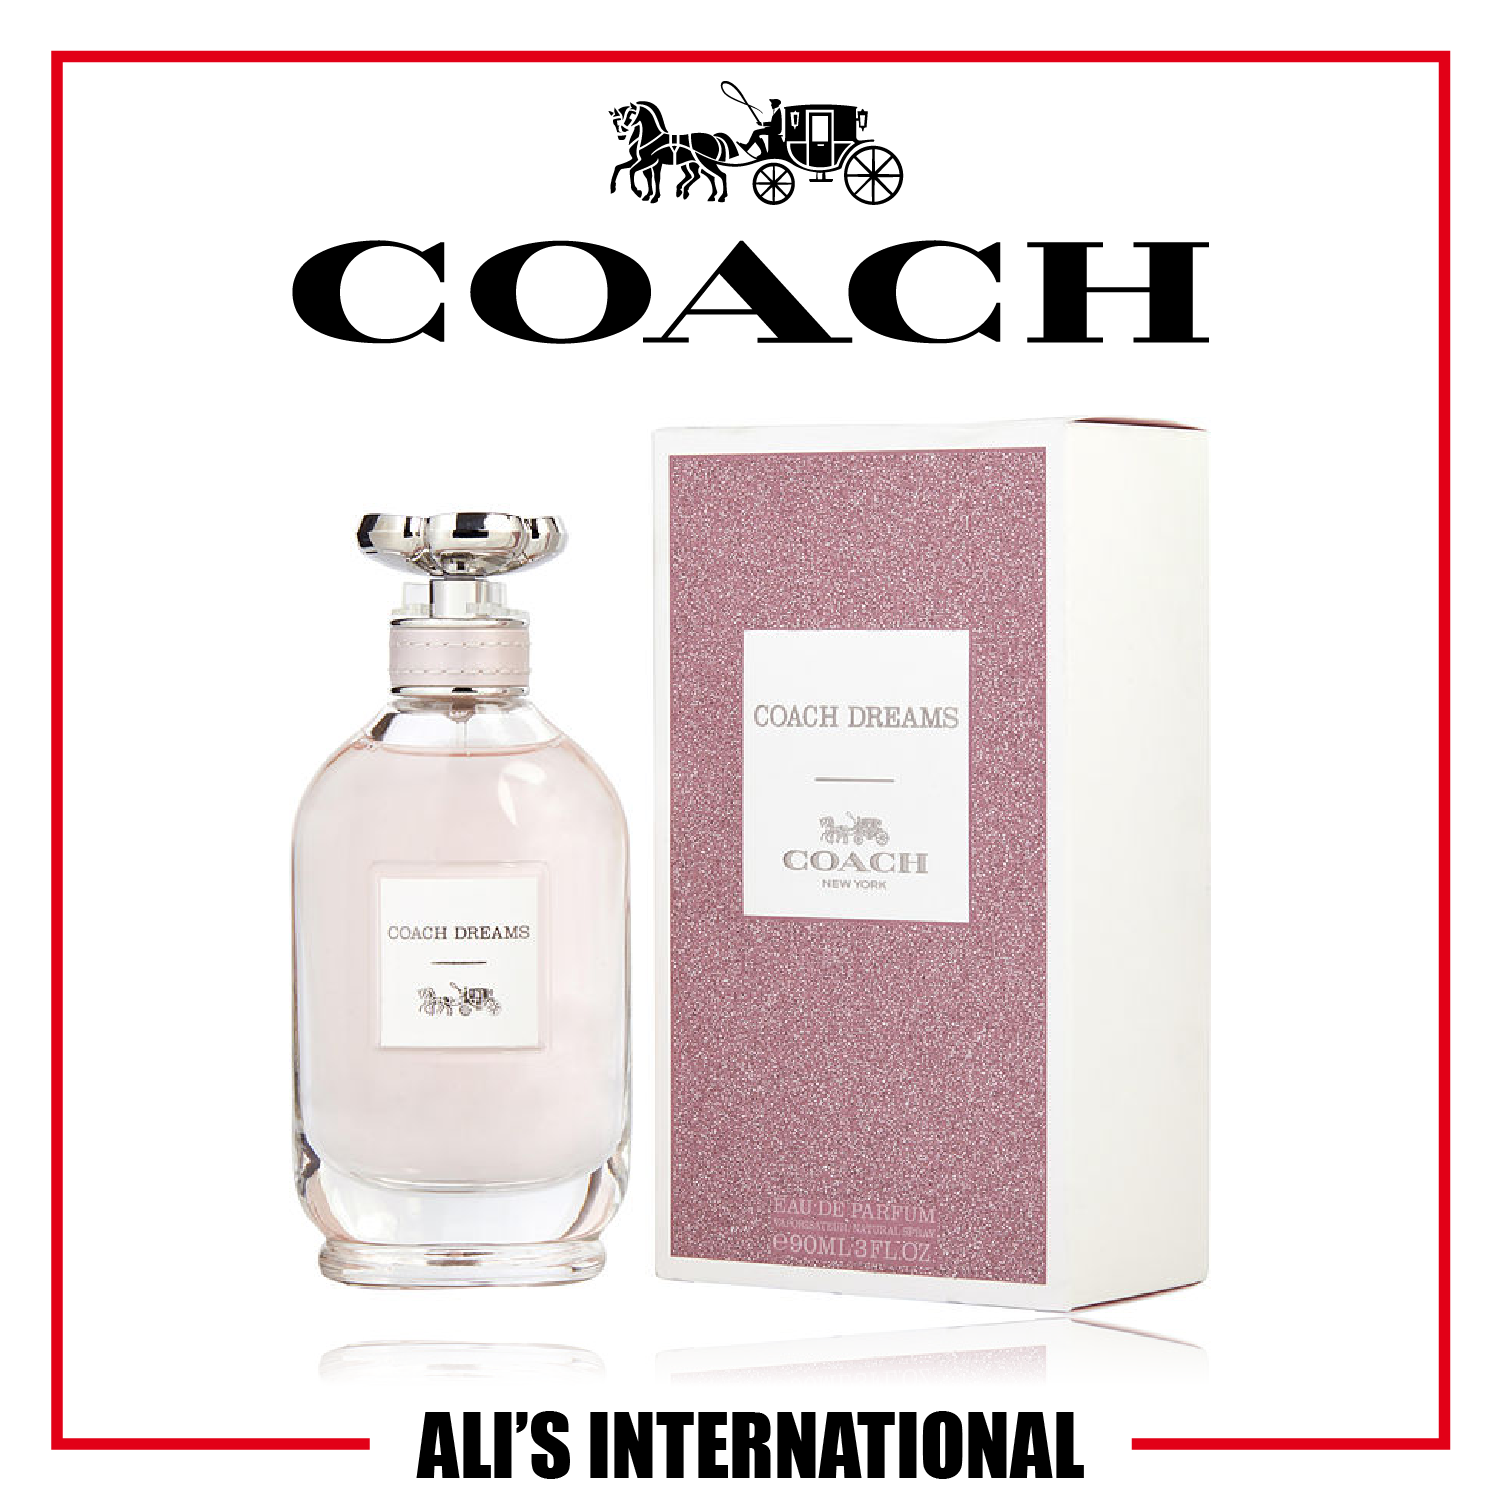 Coach Dreams For Women Eau de Parfum Spray